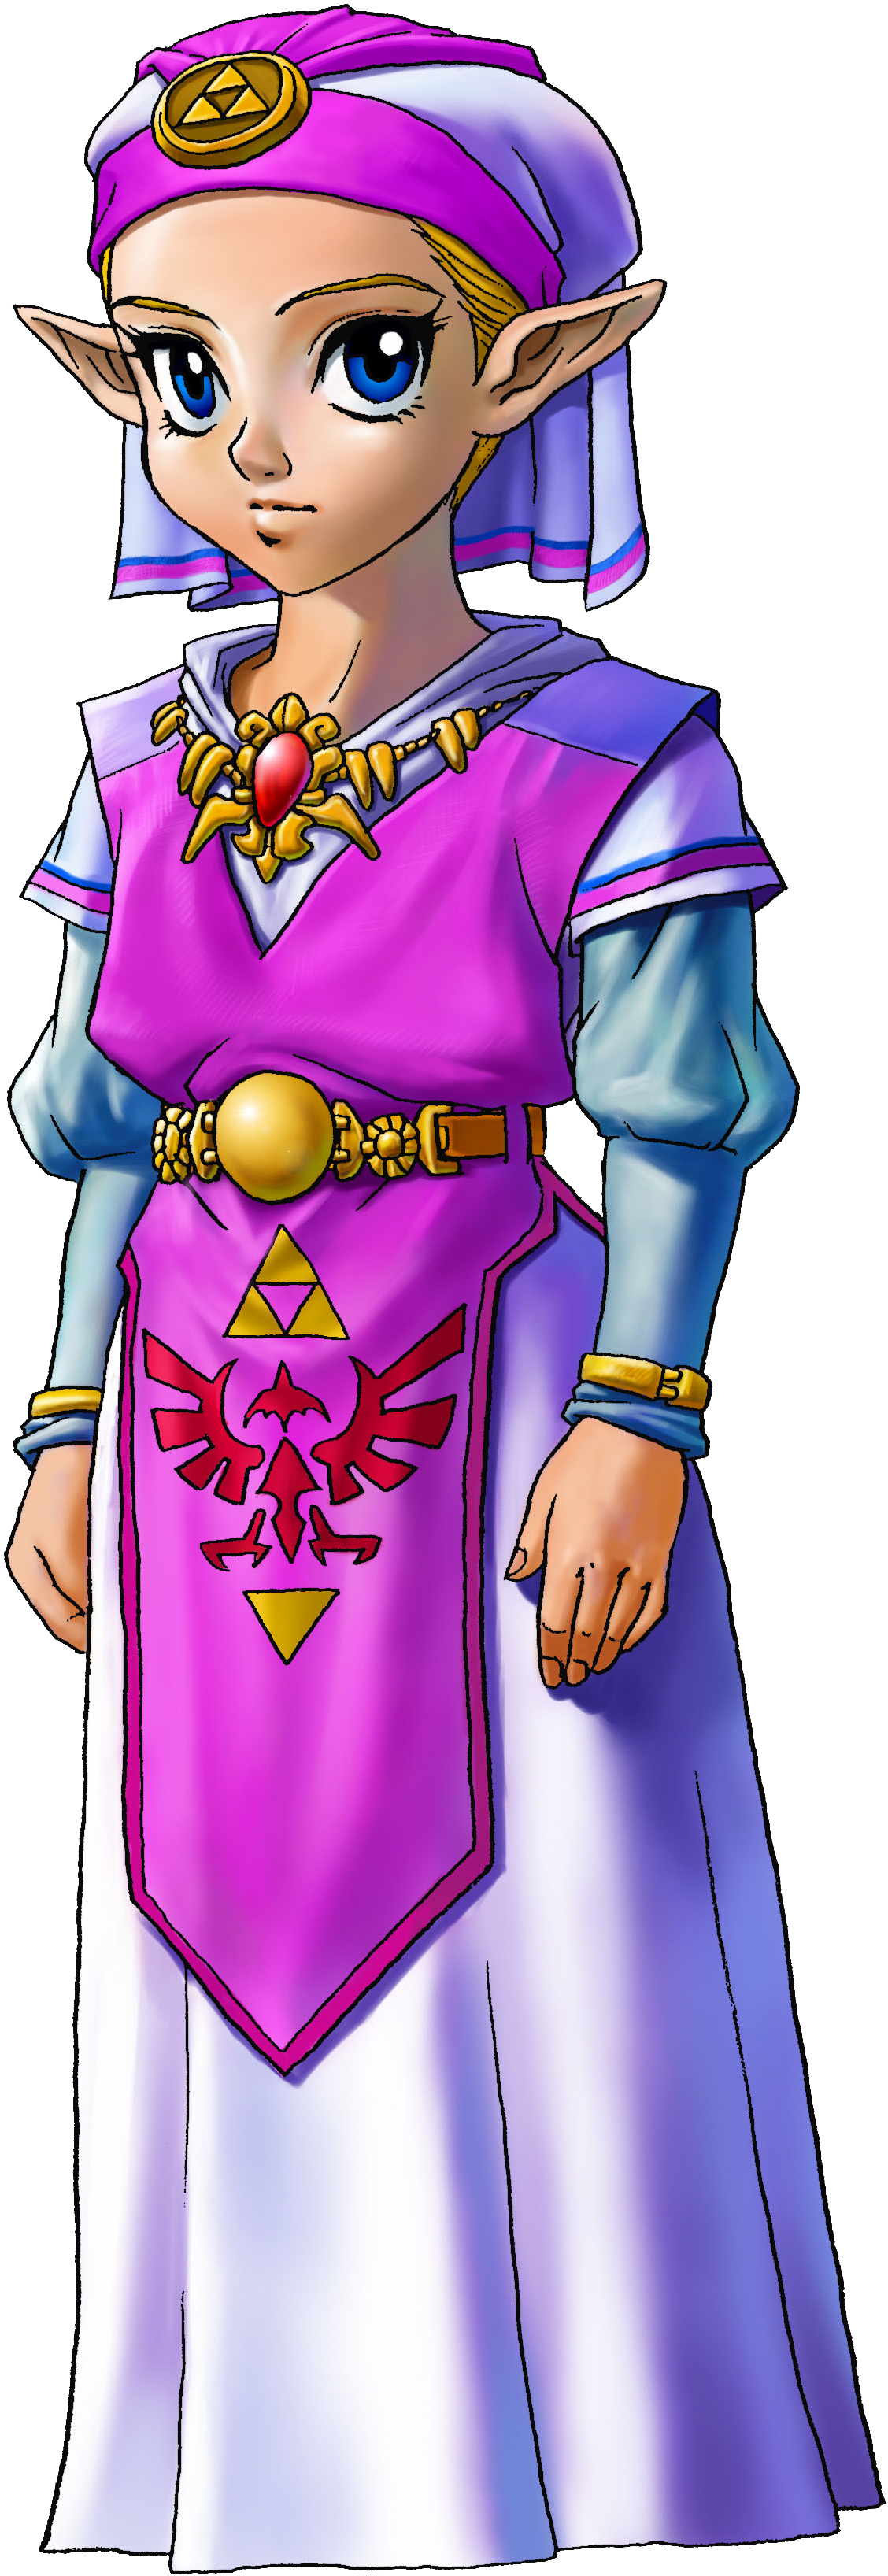 The Legend Of Zelda Ocarina Of Time PNG HD Images